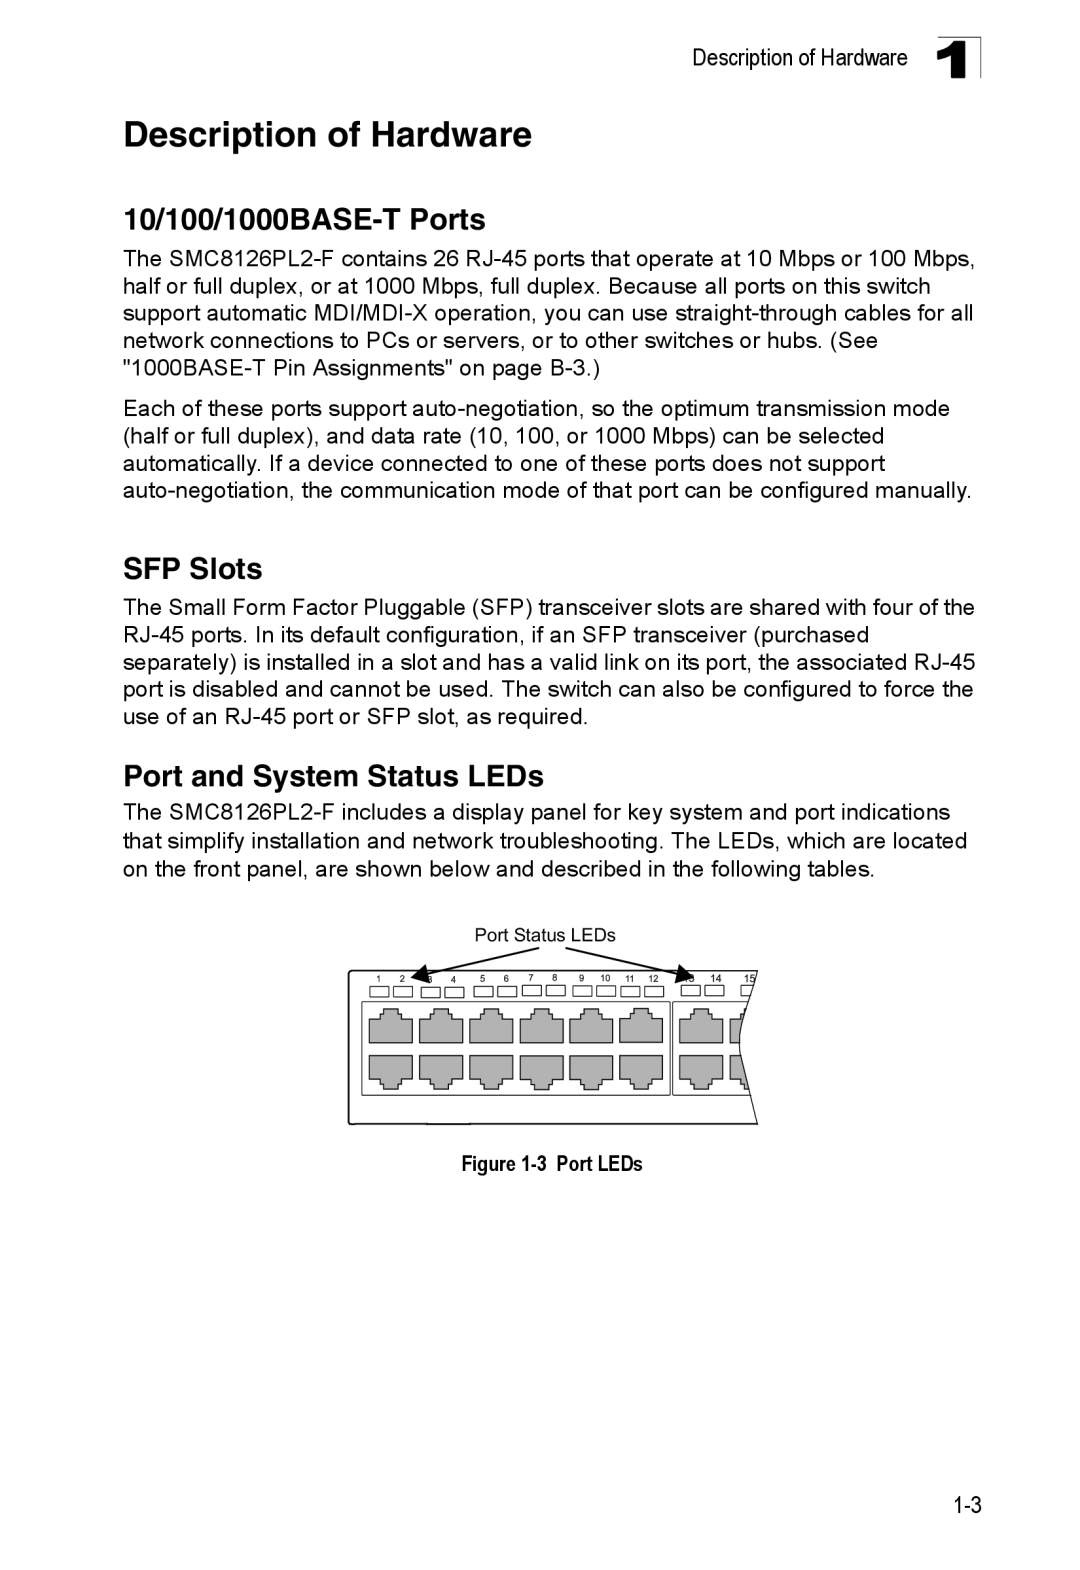 SMC Networks SMC8126PL2-F manual Description of Hardware, 10/100/1000BASE-TPorts, SFP Slots, Port and System Status LEDs 